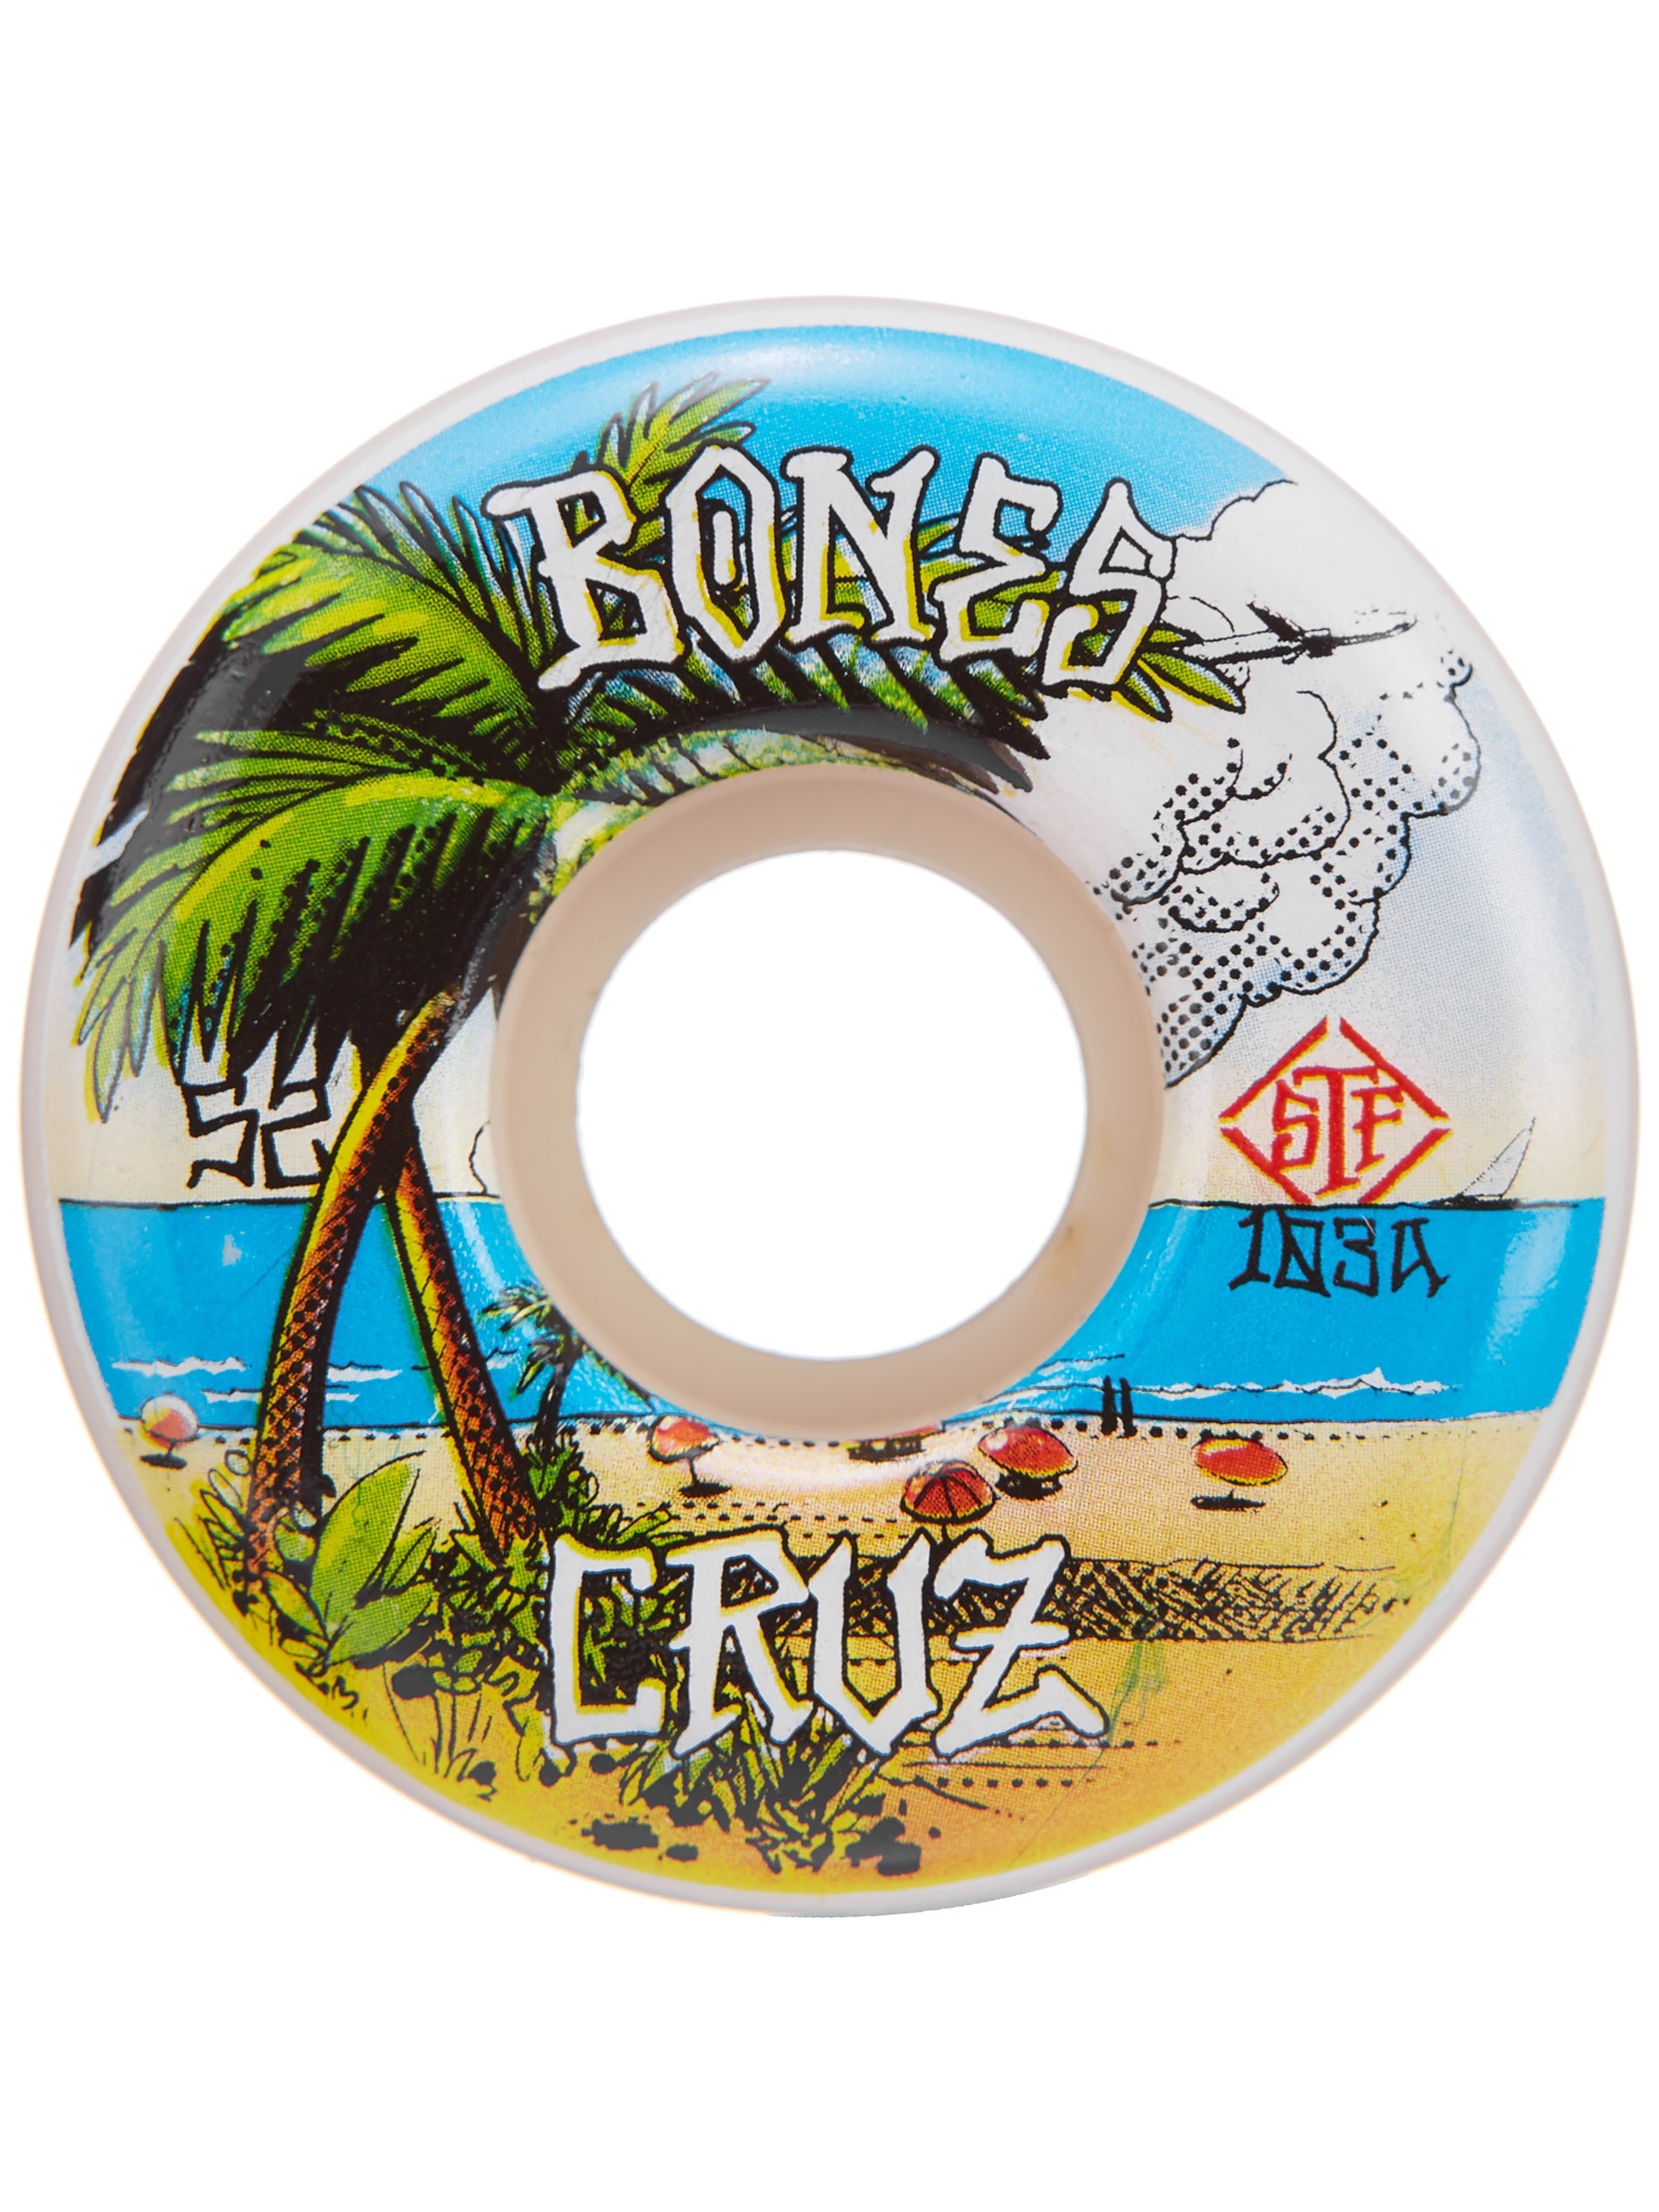 Bones STF Cruz Buena Vida 103a V2 Locks Wheels - Invisible Board Shop